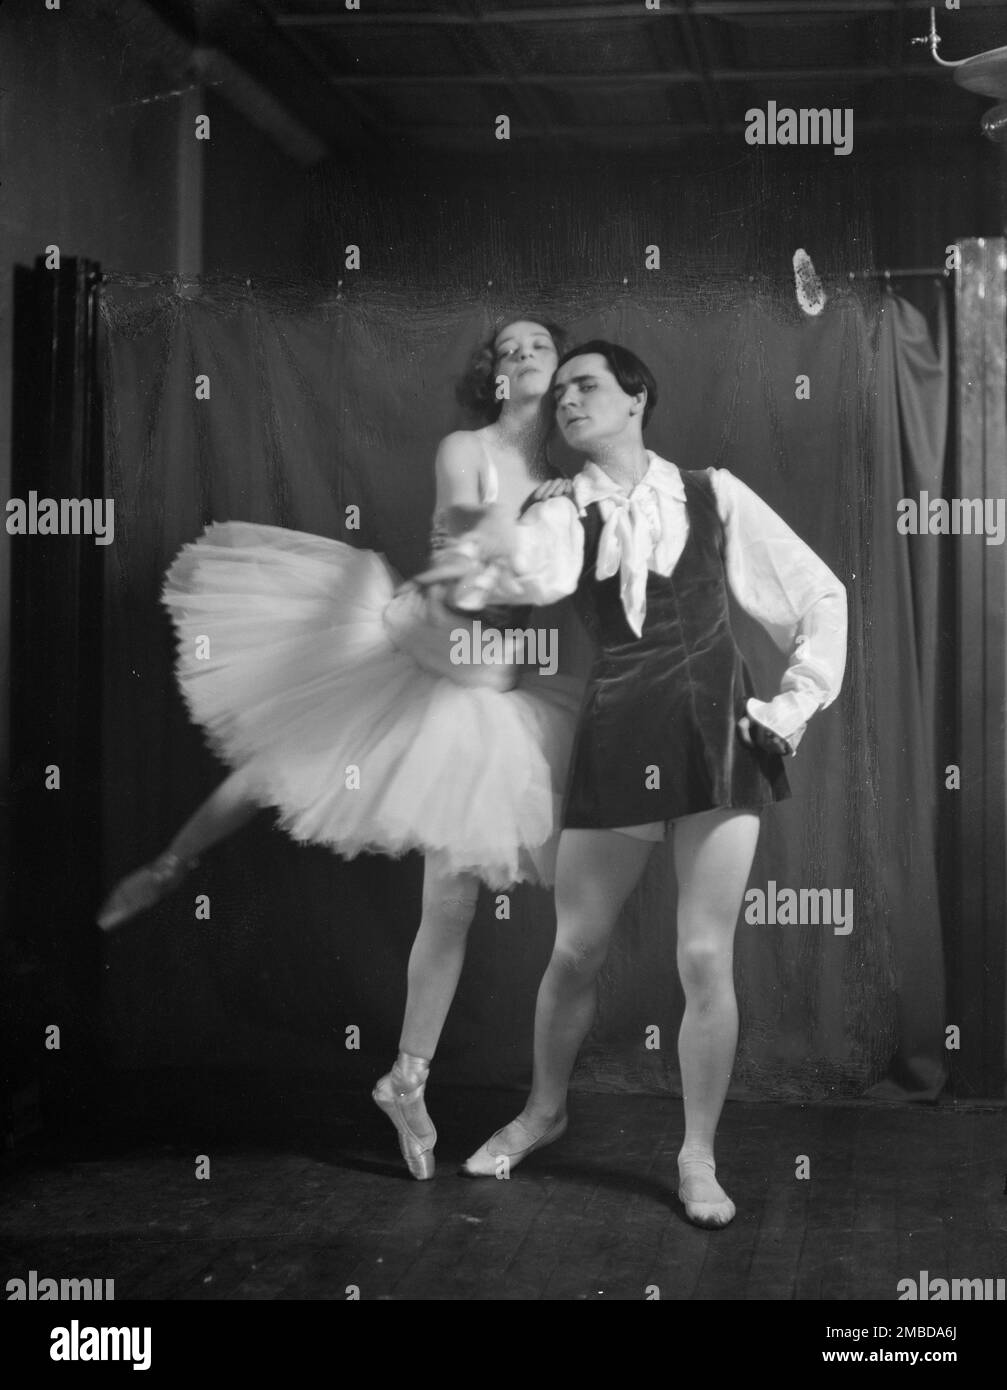 Swiskaya, Countess, and male dance partner, between 1917 and 1929. Stock Photo